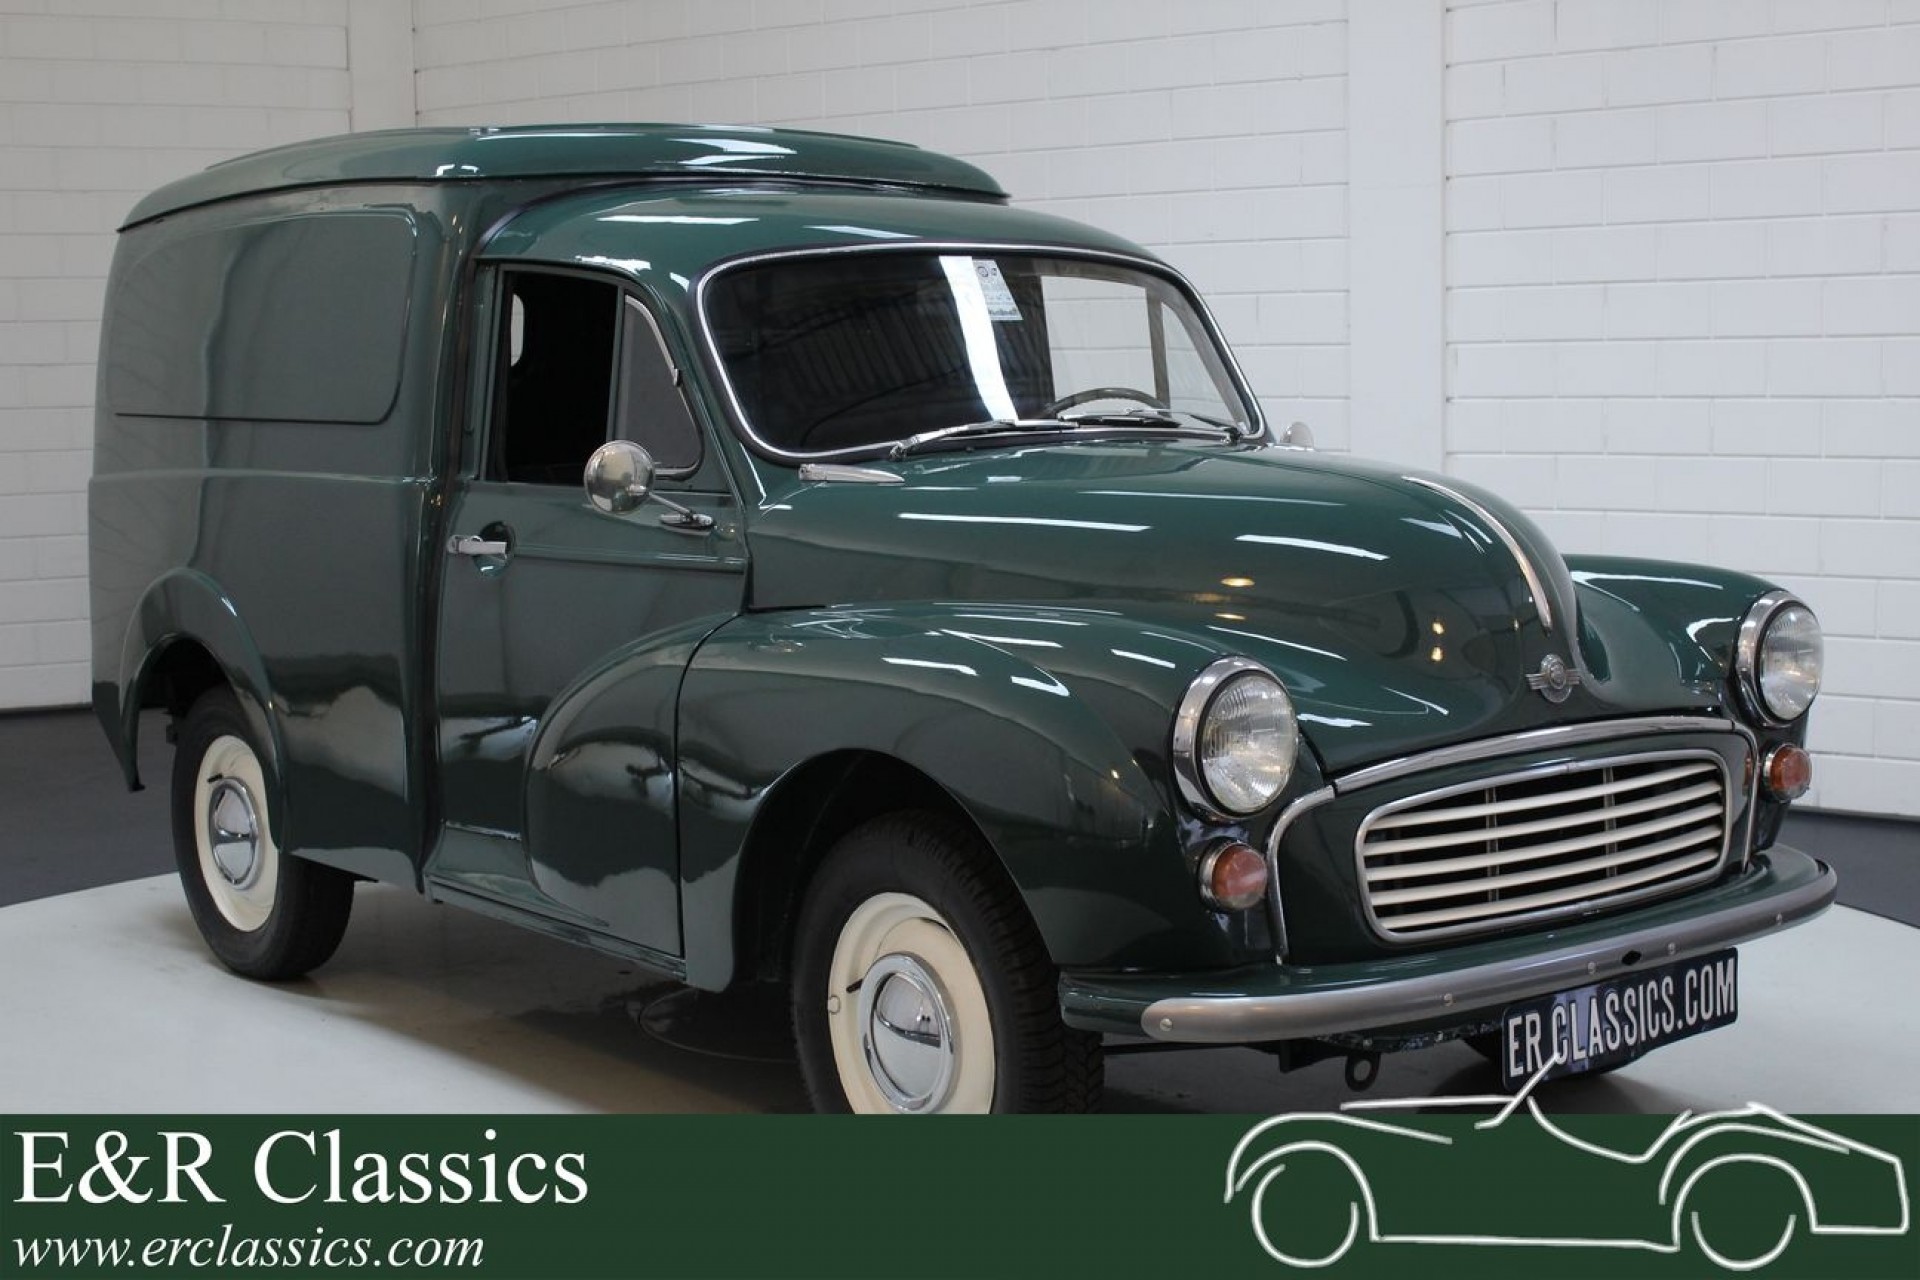 Hvornår Ubestemt Hurtig Morris Van 1960 in very beautiful condition for sale at ERclassics